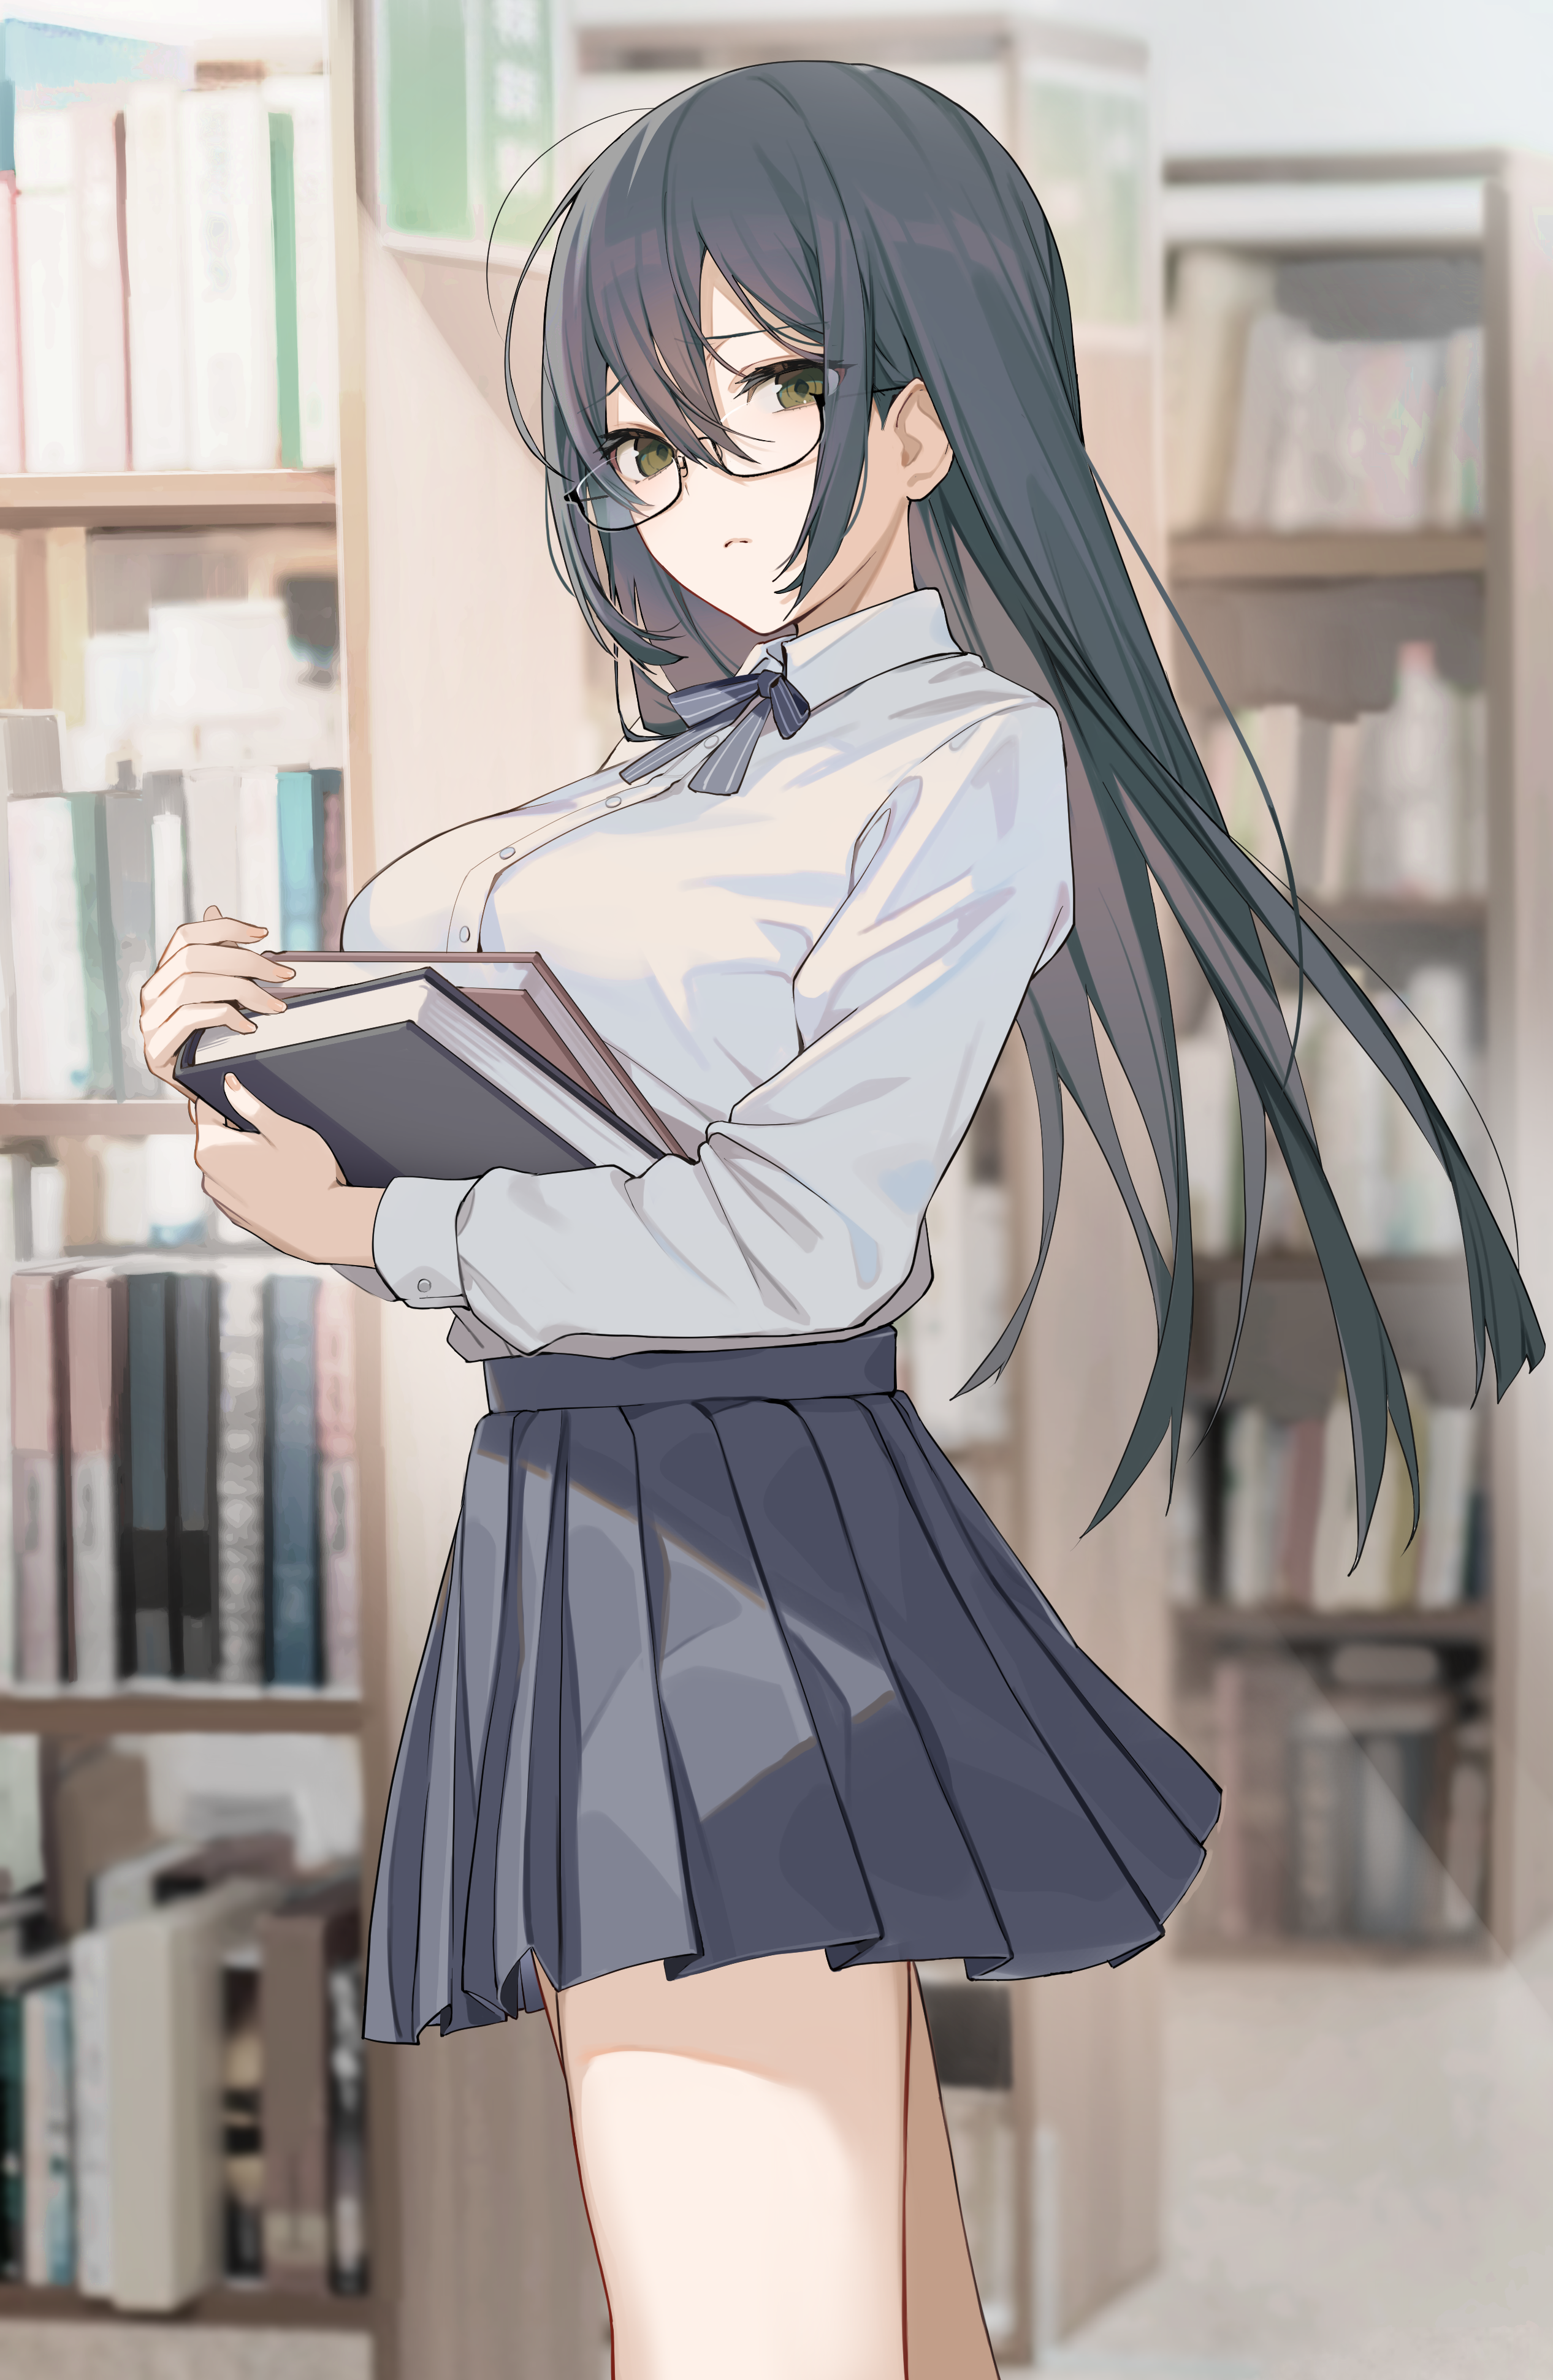 Anime 2533x3883 anime girls Icomochi library school uniform portrait display schoolgirl glasses skirt books bow tie long hair looking at viewer